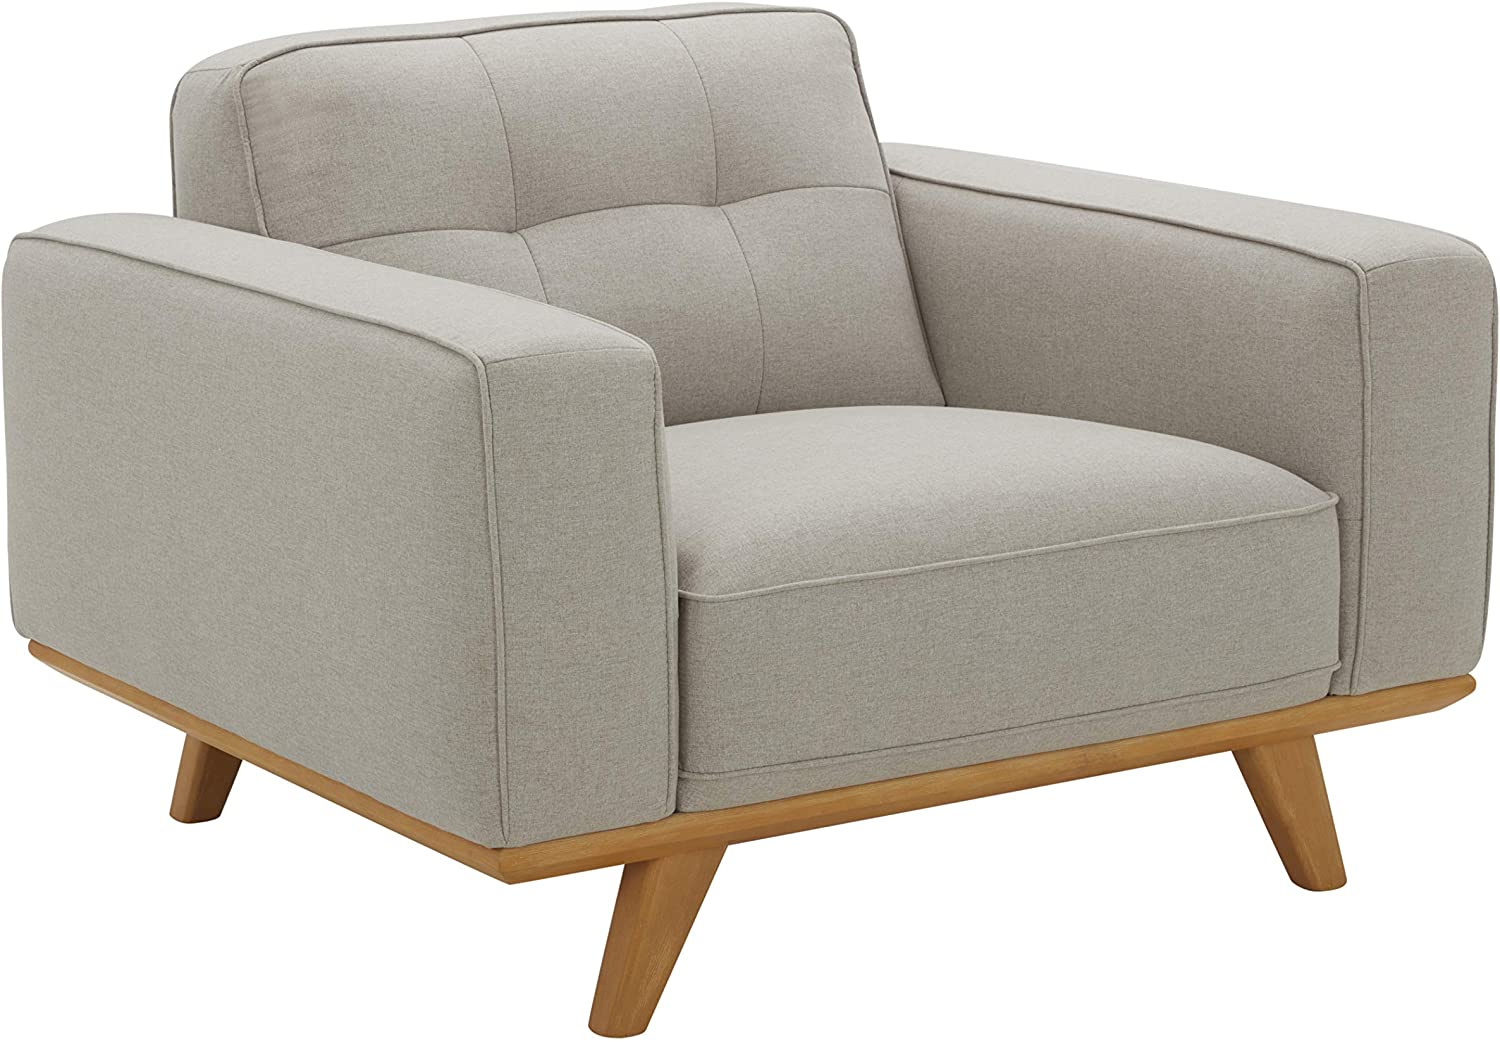 Sofa Chair : Modern Chair with Wood Base